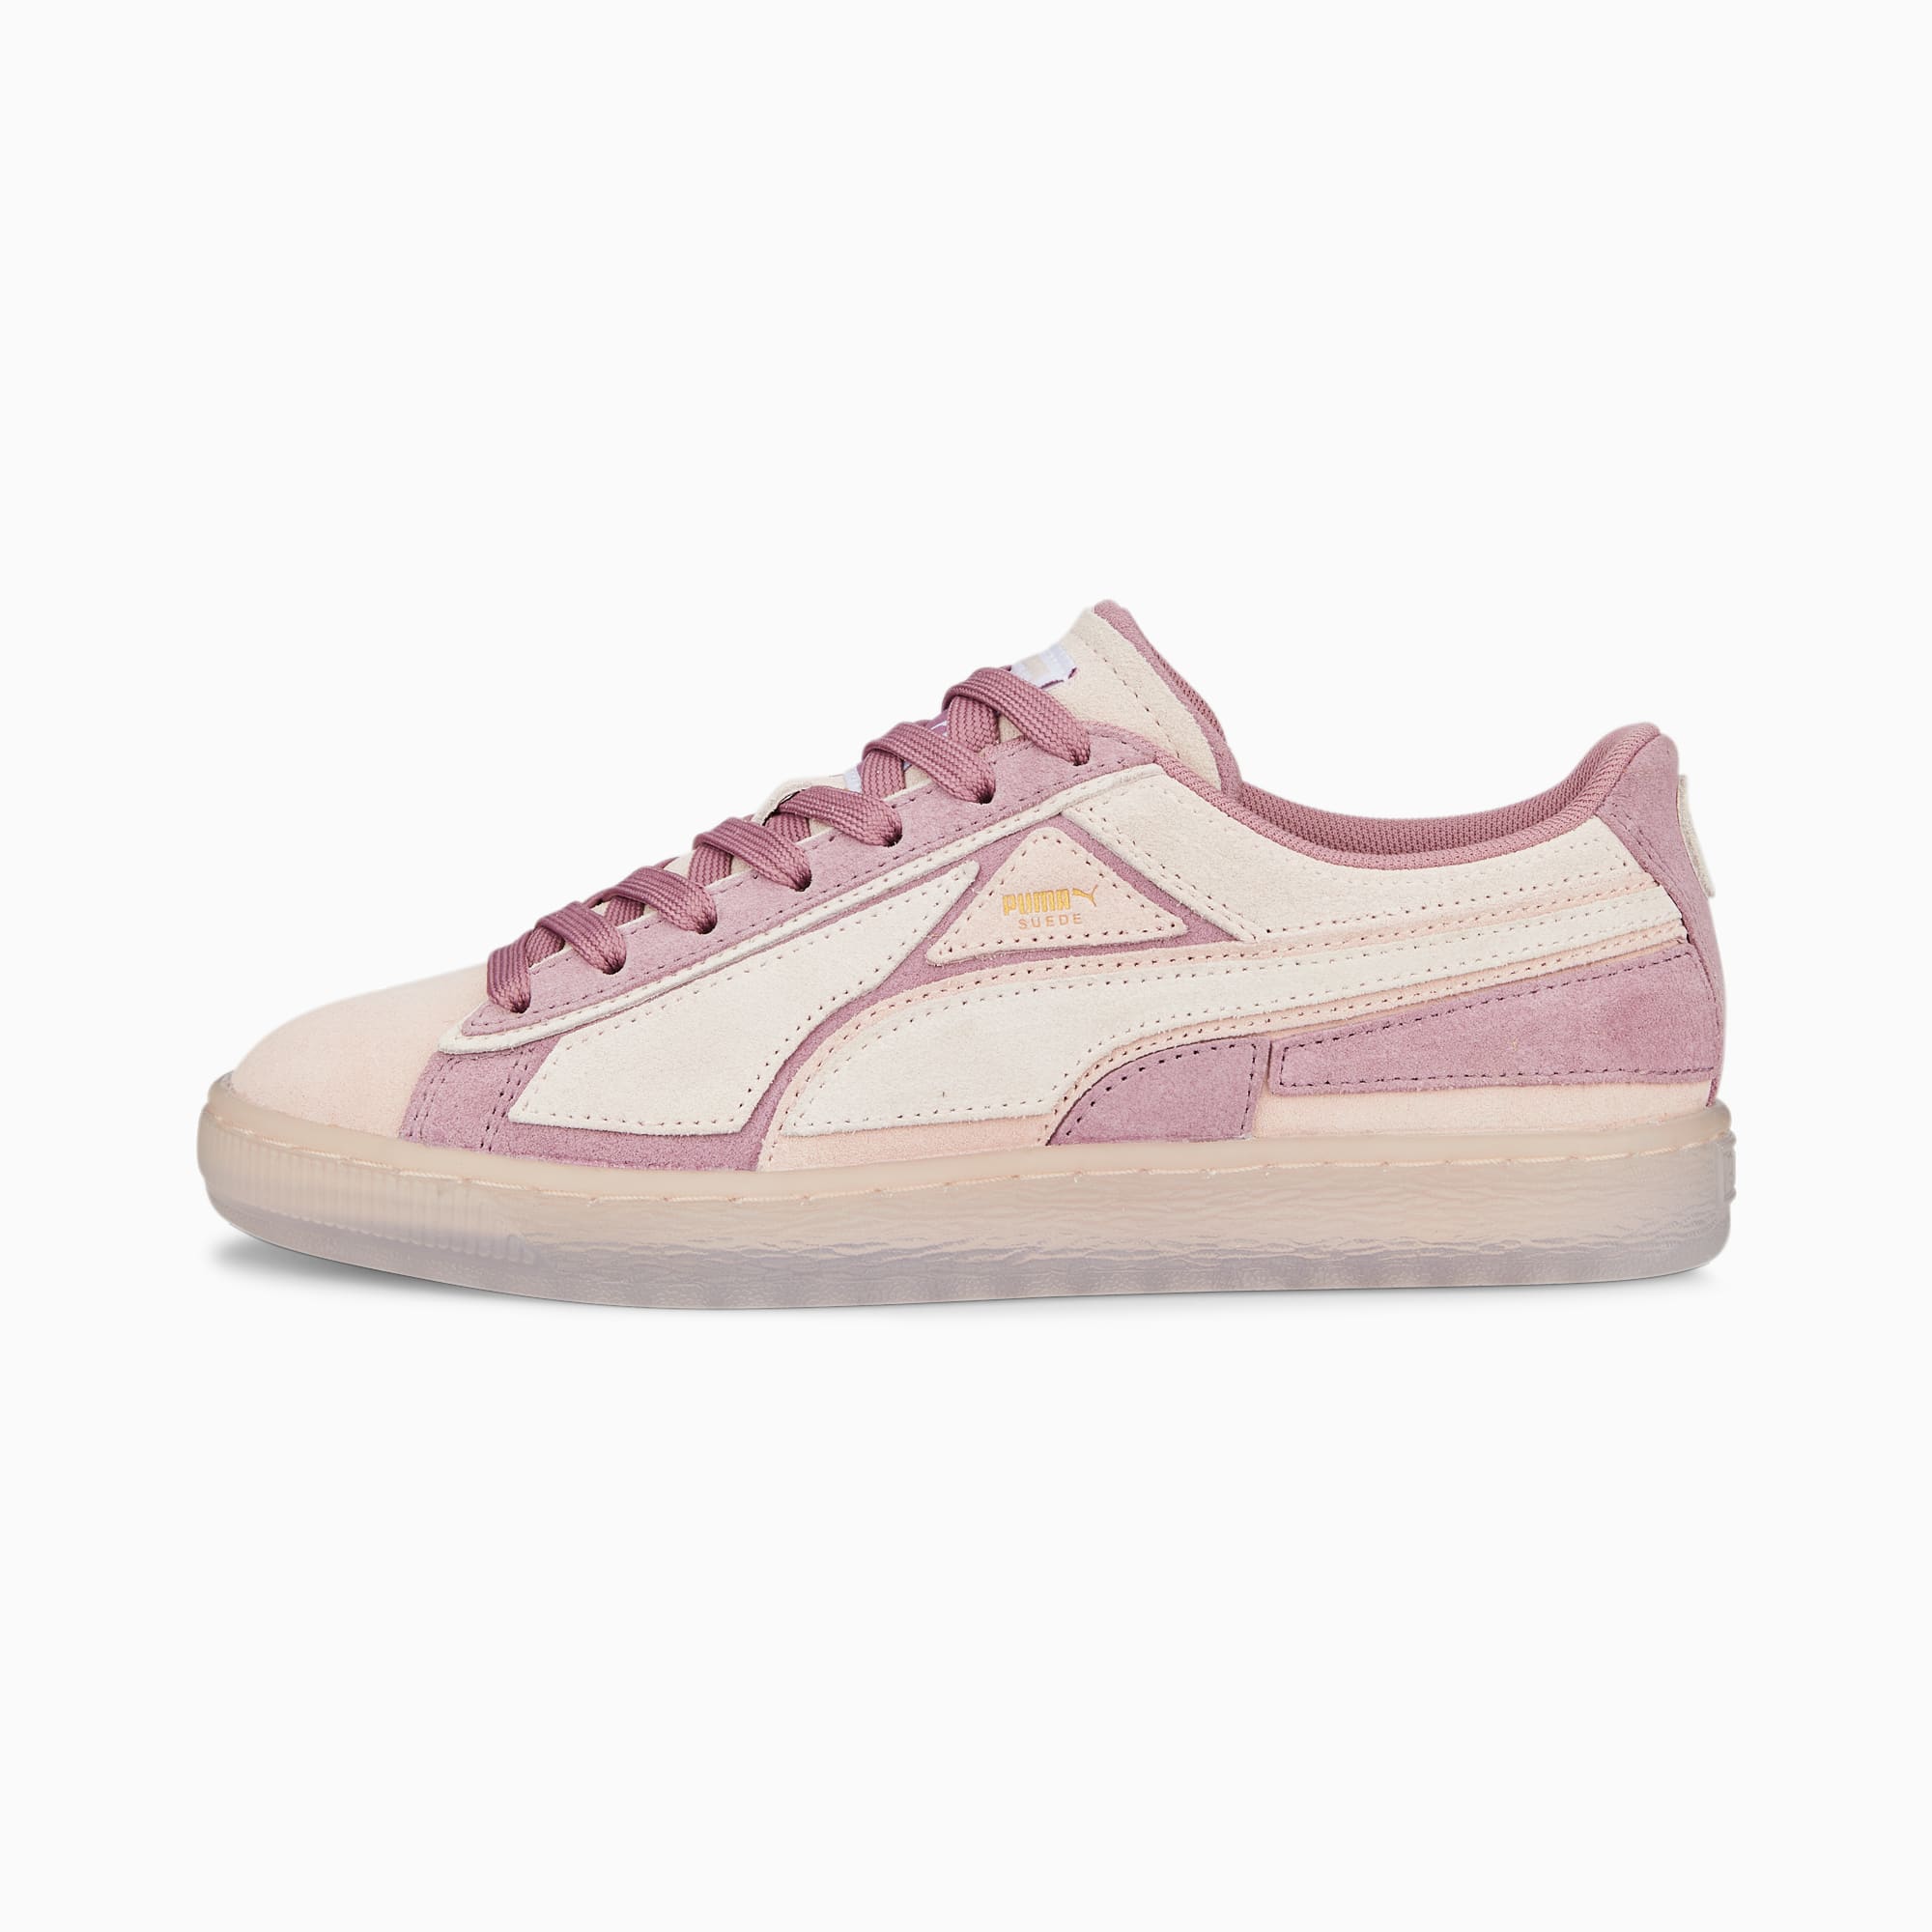 Suede Layers Mono Sneakers | Rose Quartz-Island Pink-Pale | PUMA Shopback x PUMA | PUMA